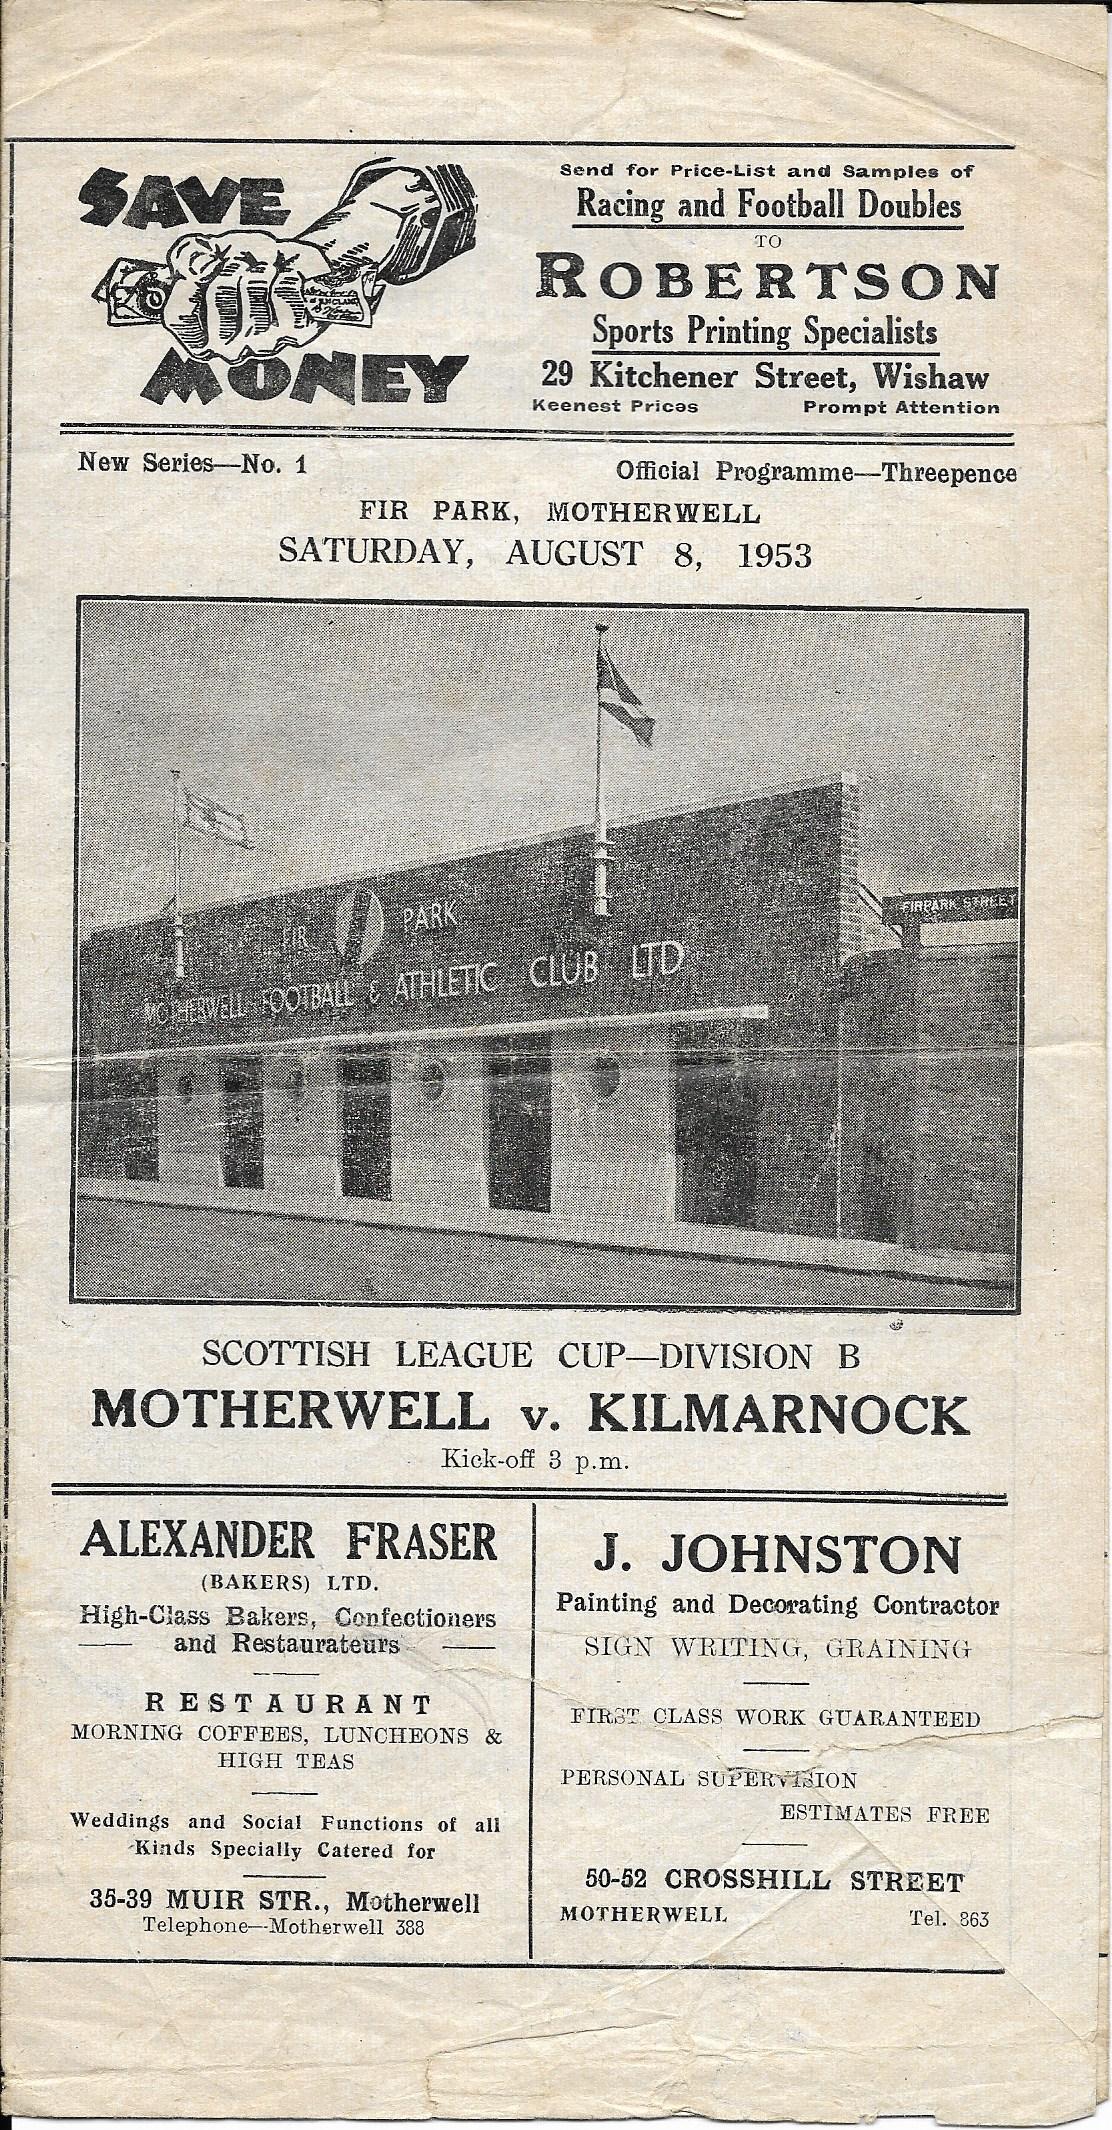 versus Kilmarnock Programme Cover